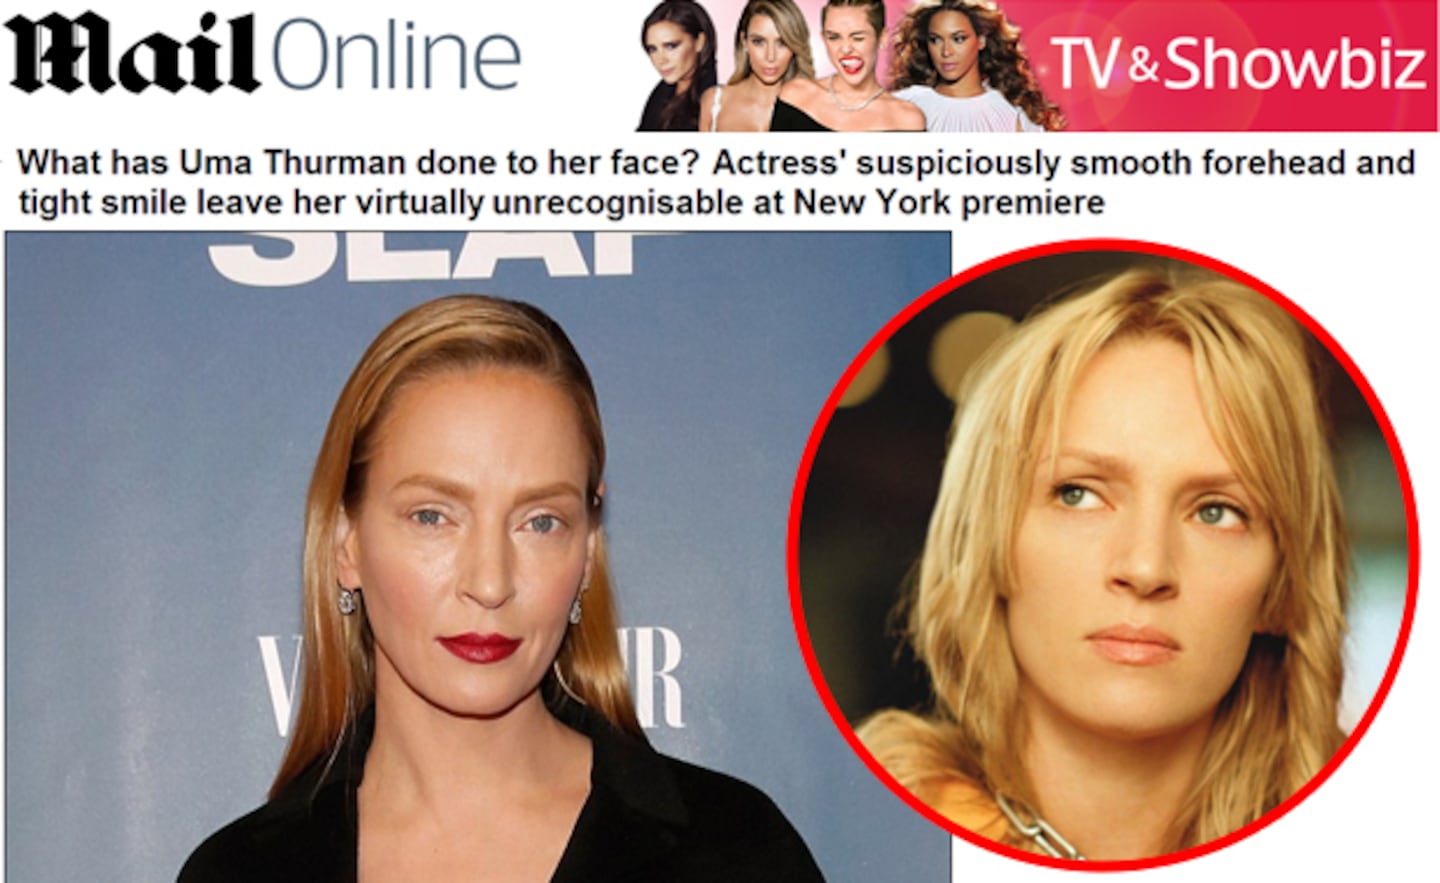 Uma Thurman y su sospechoso "maquillaje". (Foto: Daily Mail)